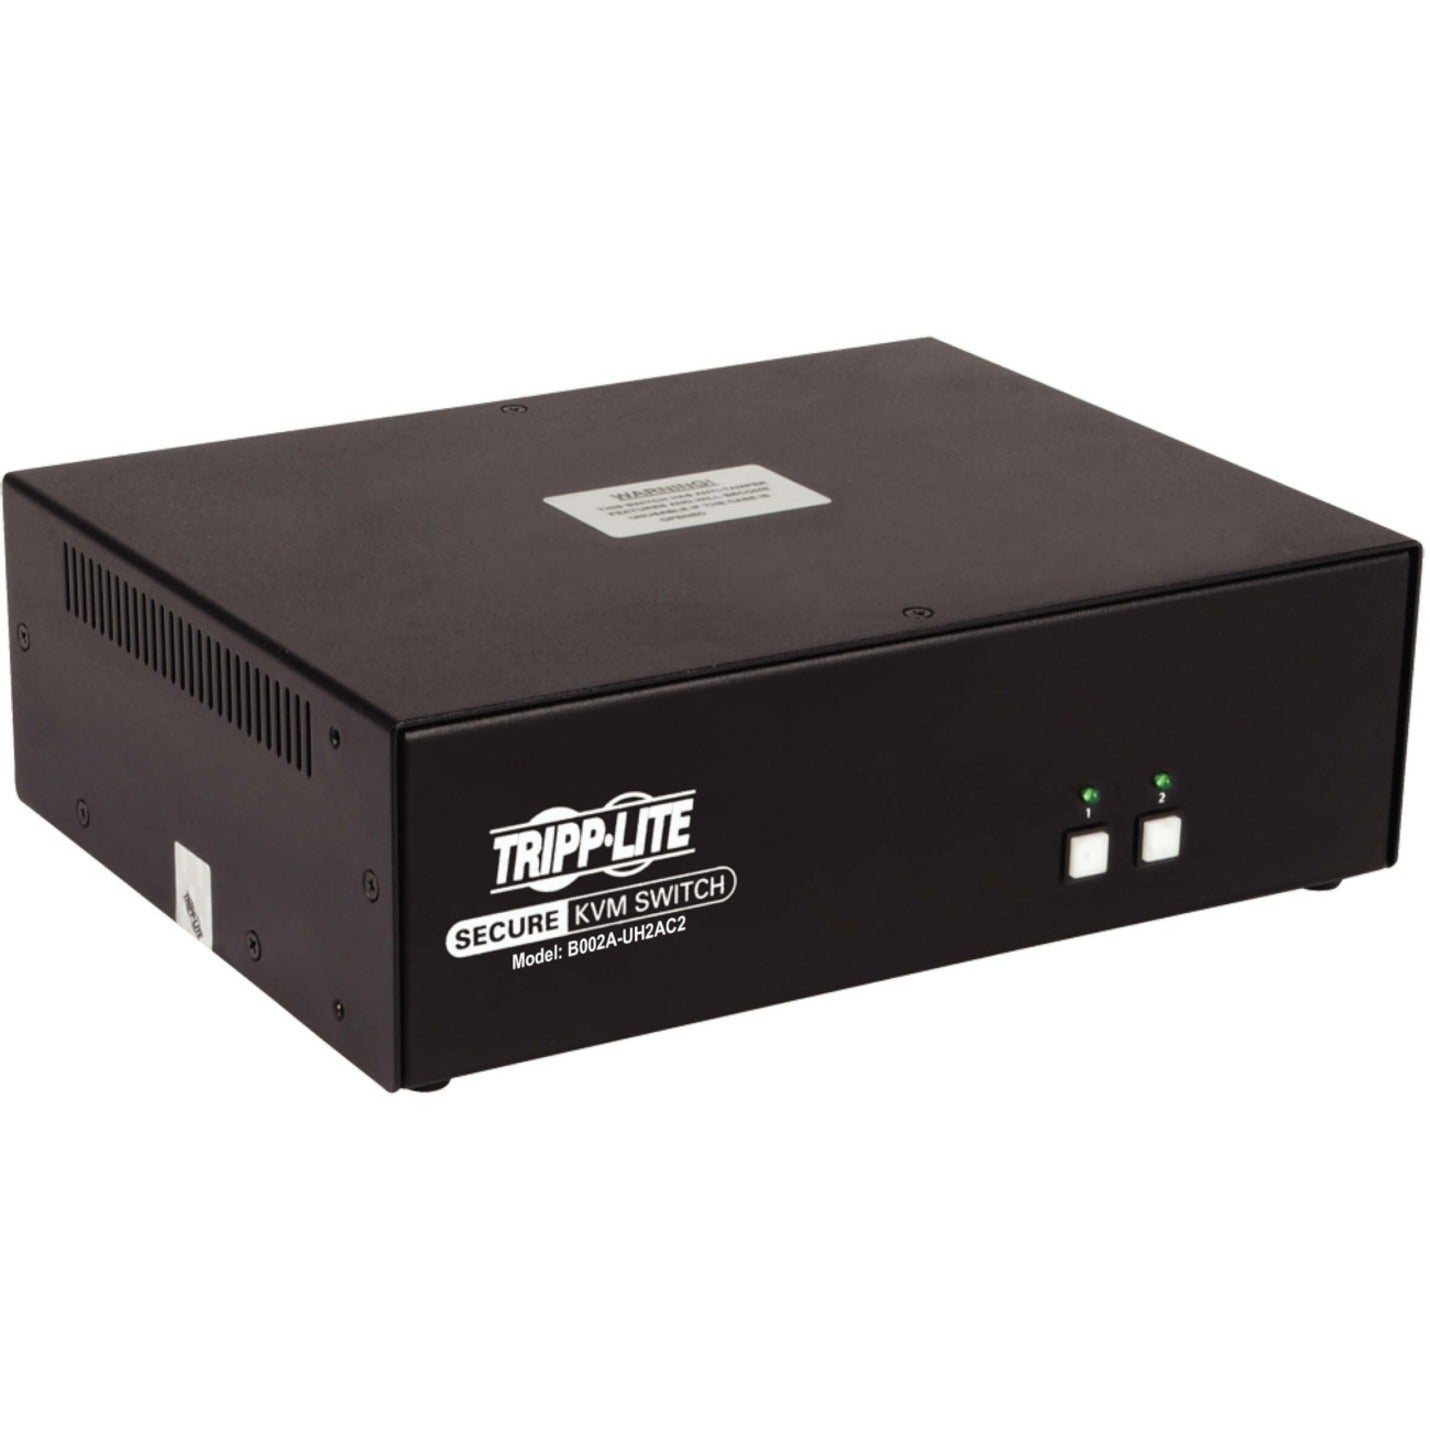 Tripp Lite B002A-UH2AC2 2-Port 双屏安全 KVM 切换器，HDMI - 4K，NIAP PP3.0，音频，CAC，TAA  品牌名称：Tripp Lite Tripp Lite 的中文翻译：特力品牌